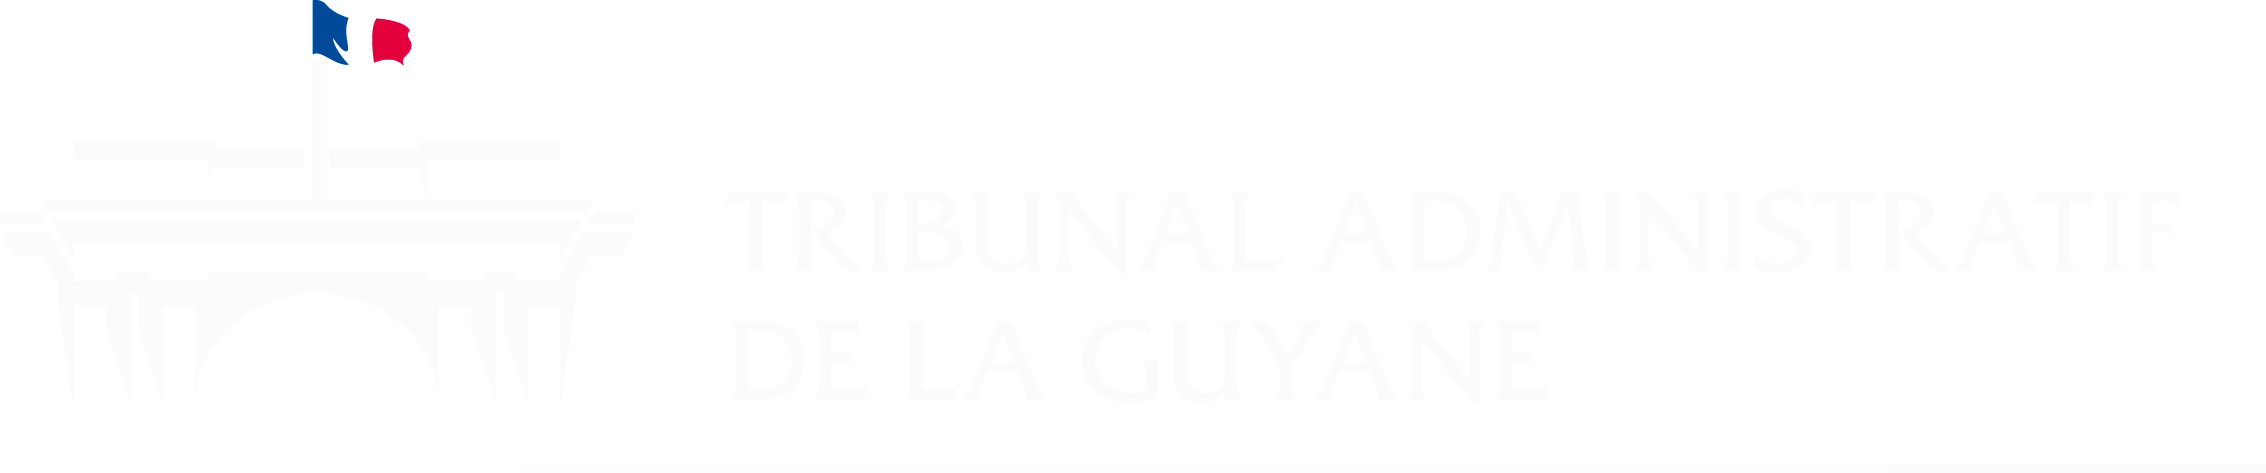 Tribunal administratif de Guyane - Retour à l'accueil